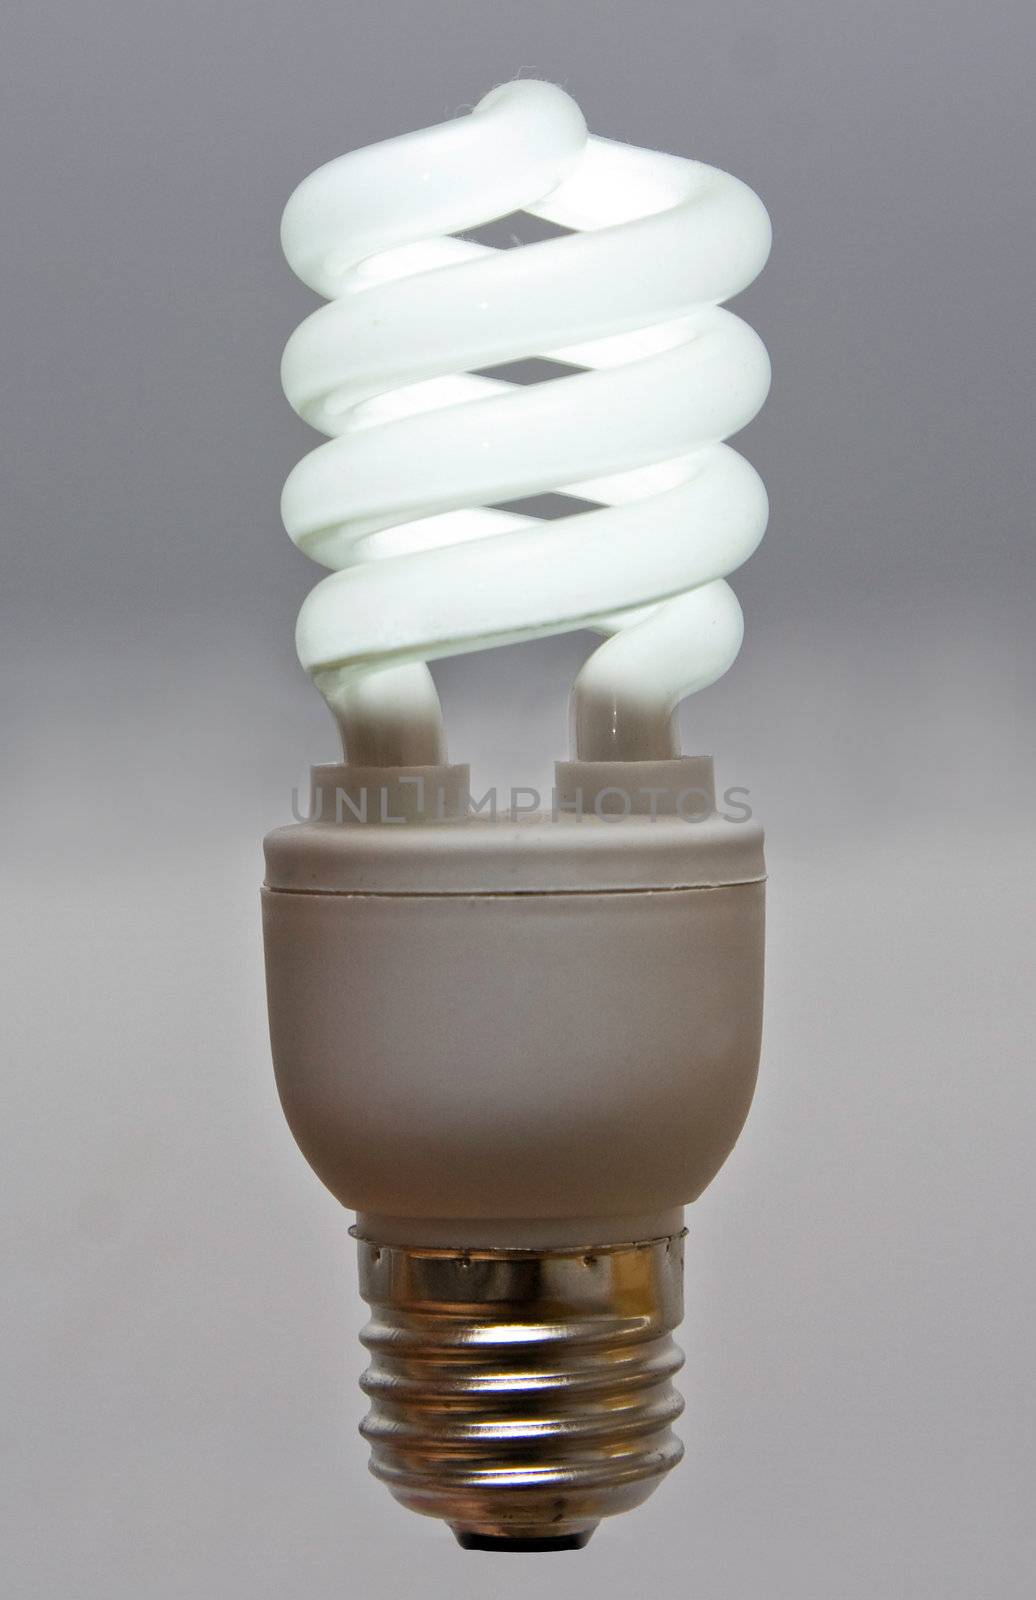 An environmentally friendly, power and money saving light bulb